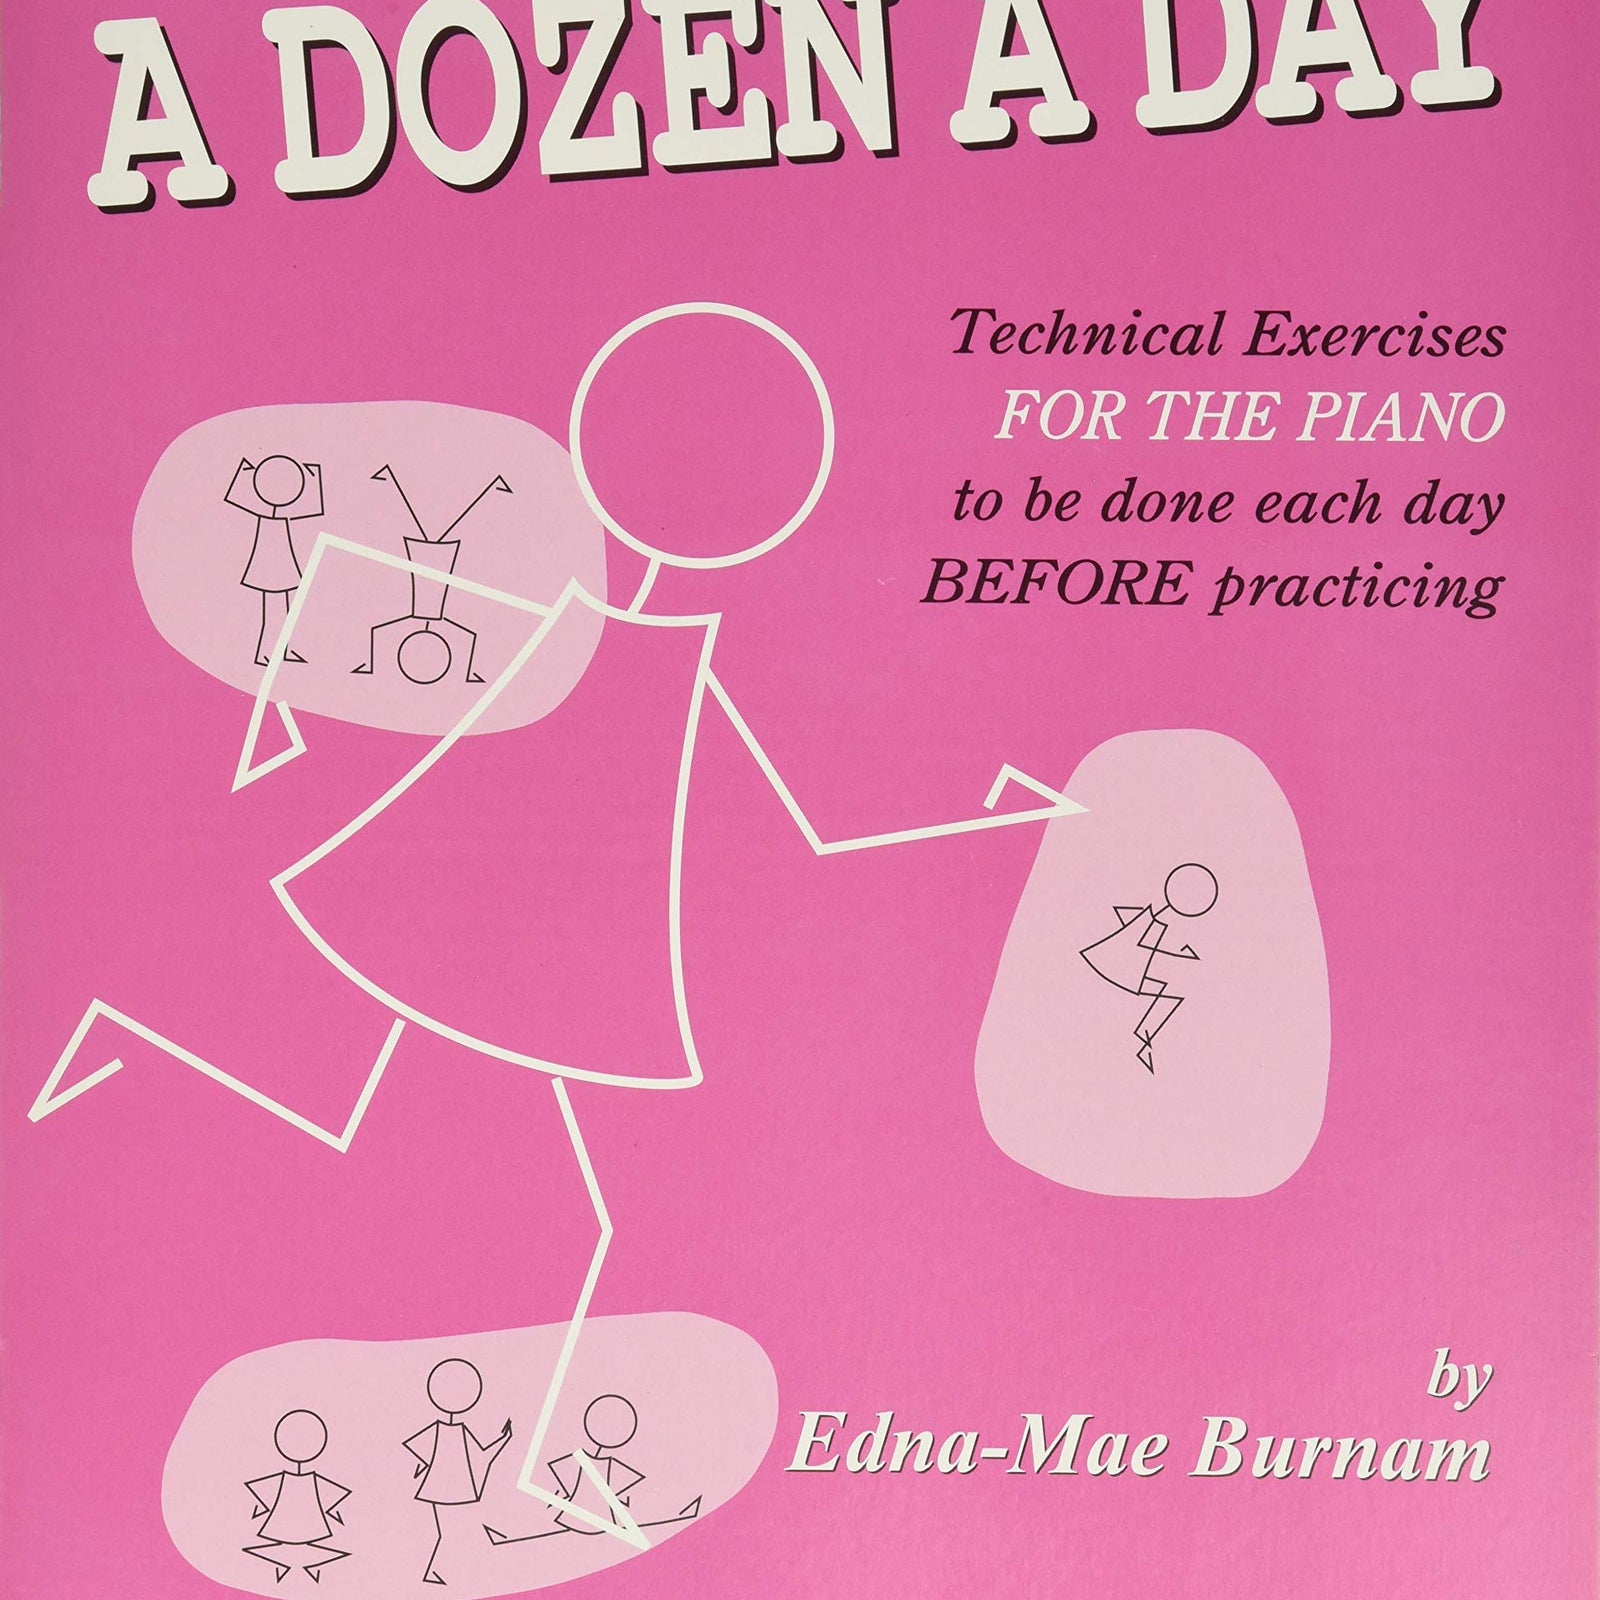 A Dozen A Day - Mini Book